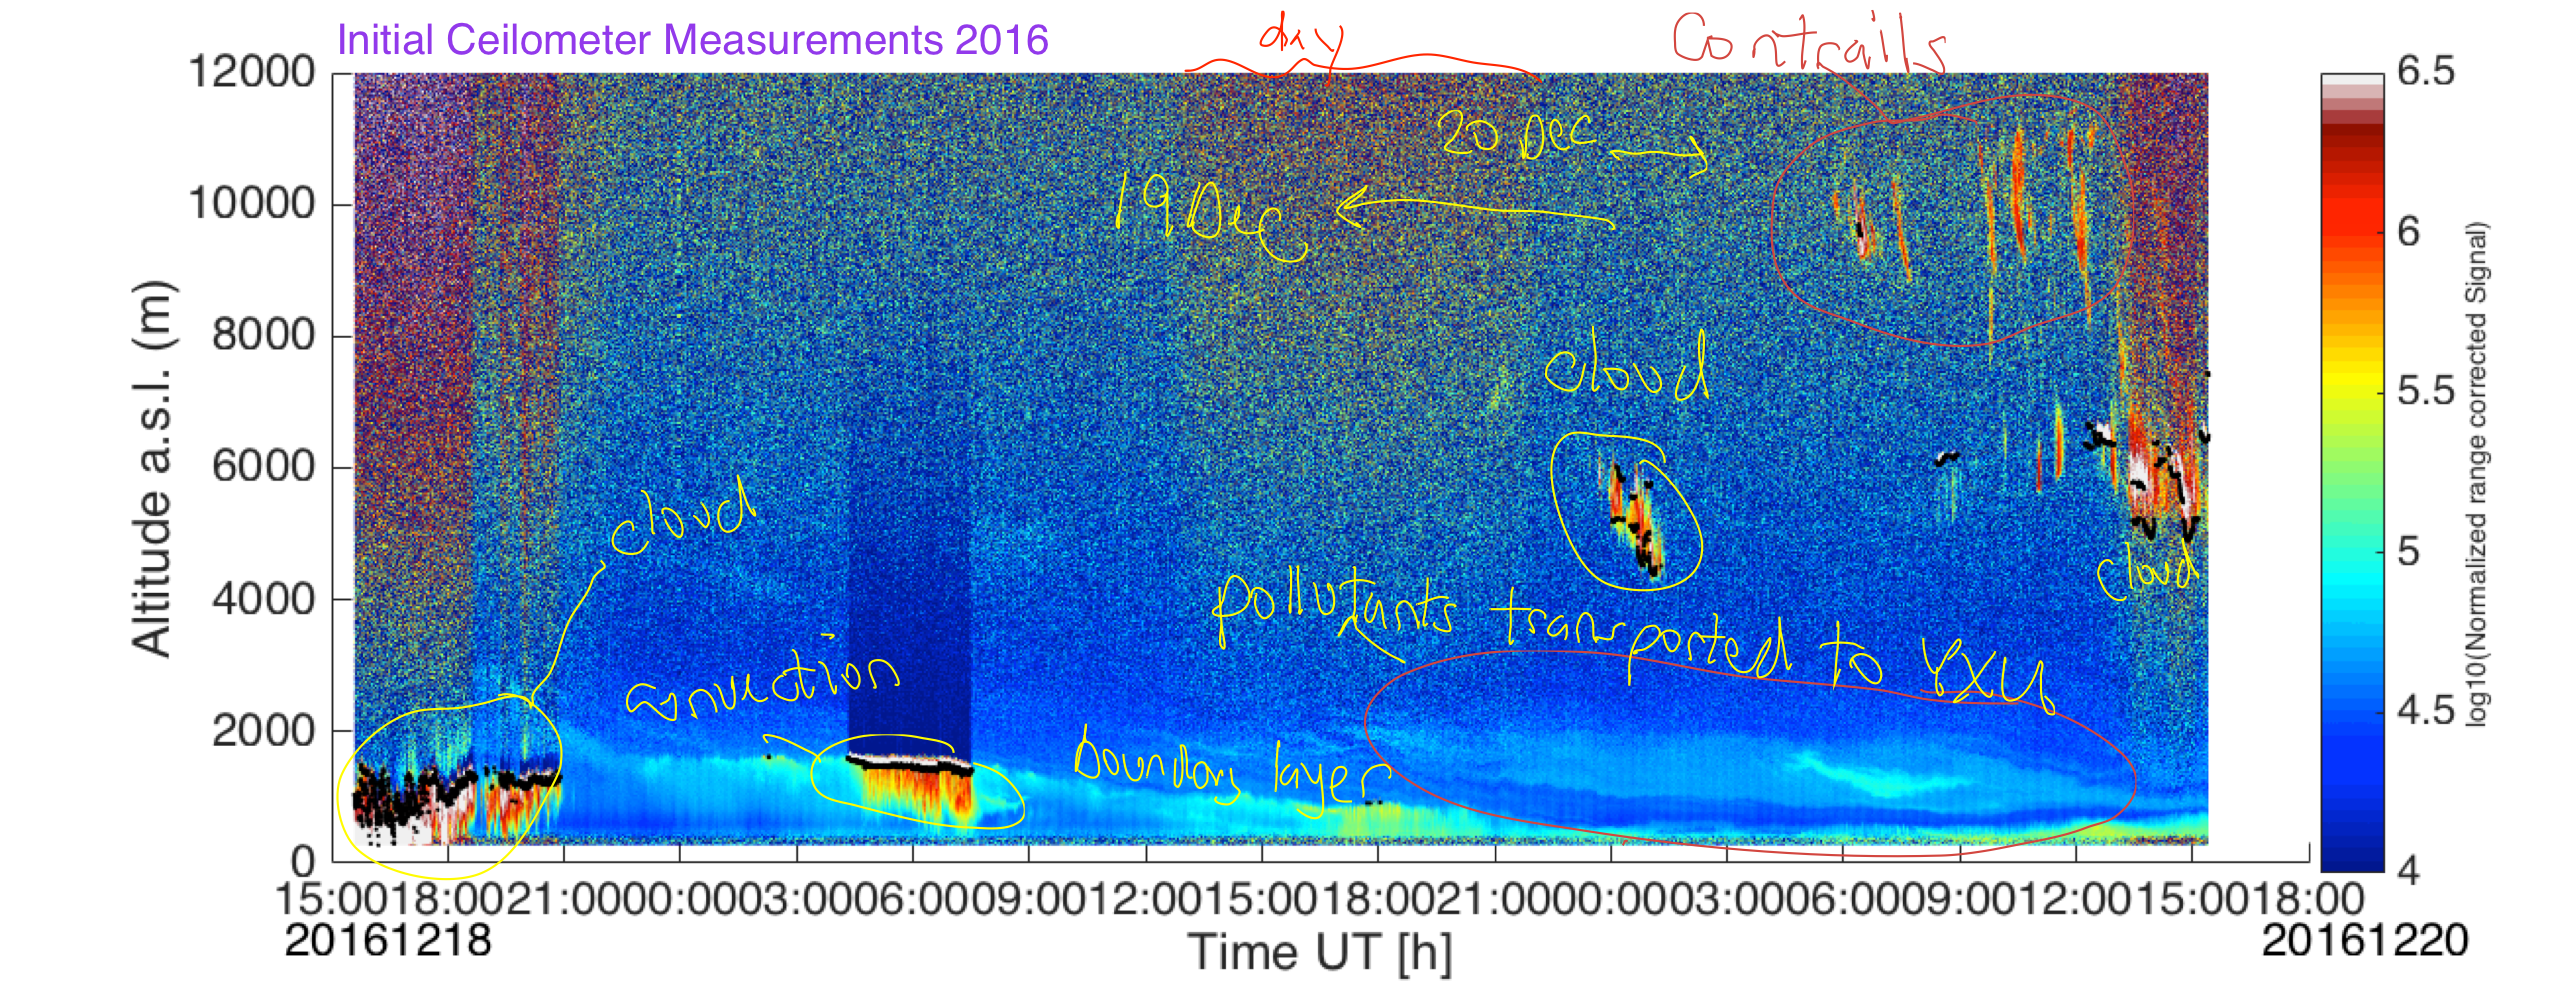 Cronyn ceilometer measurements on 19-20 Dec 2016.